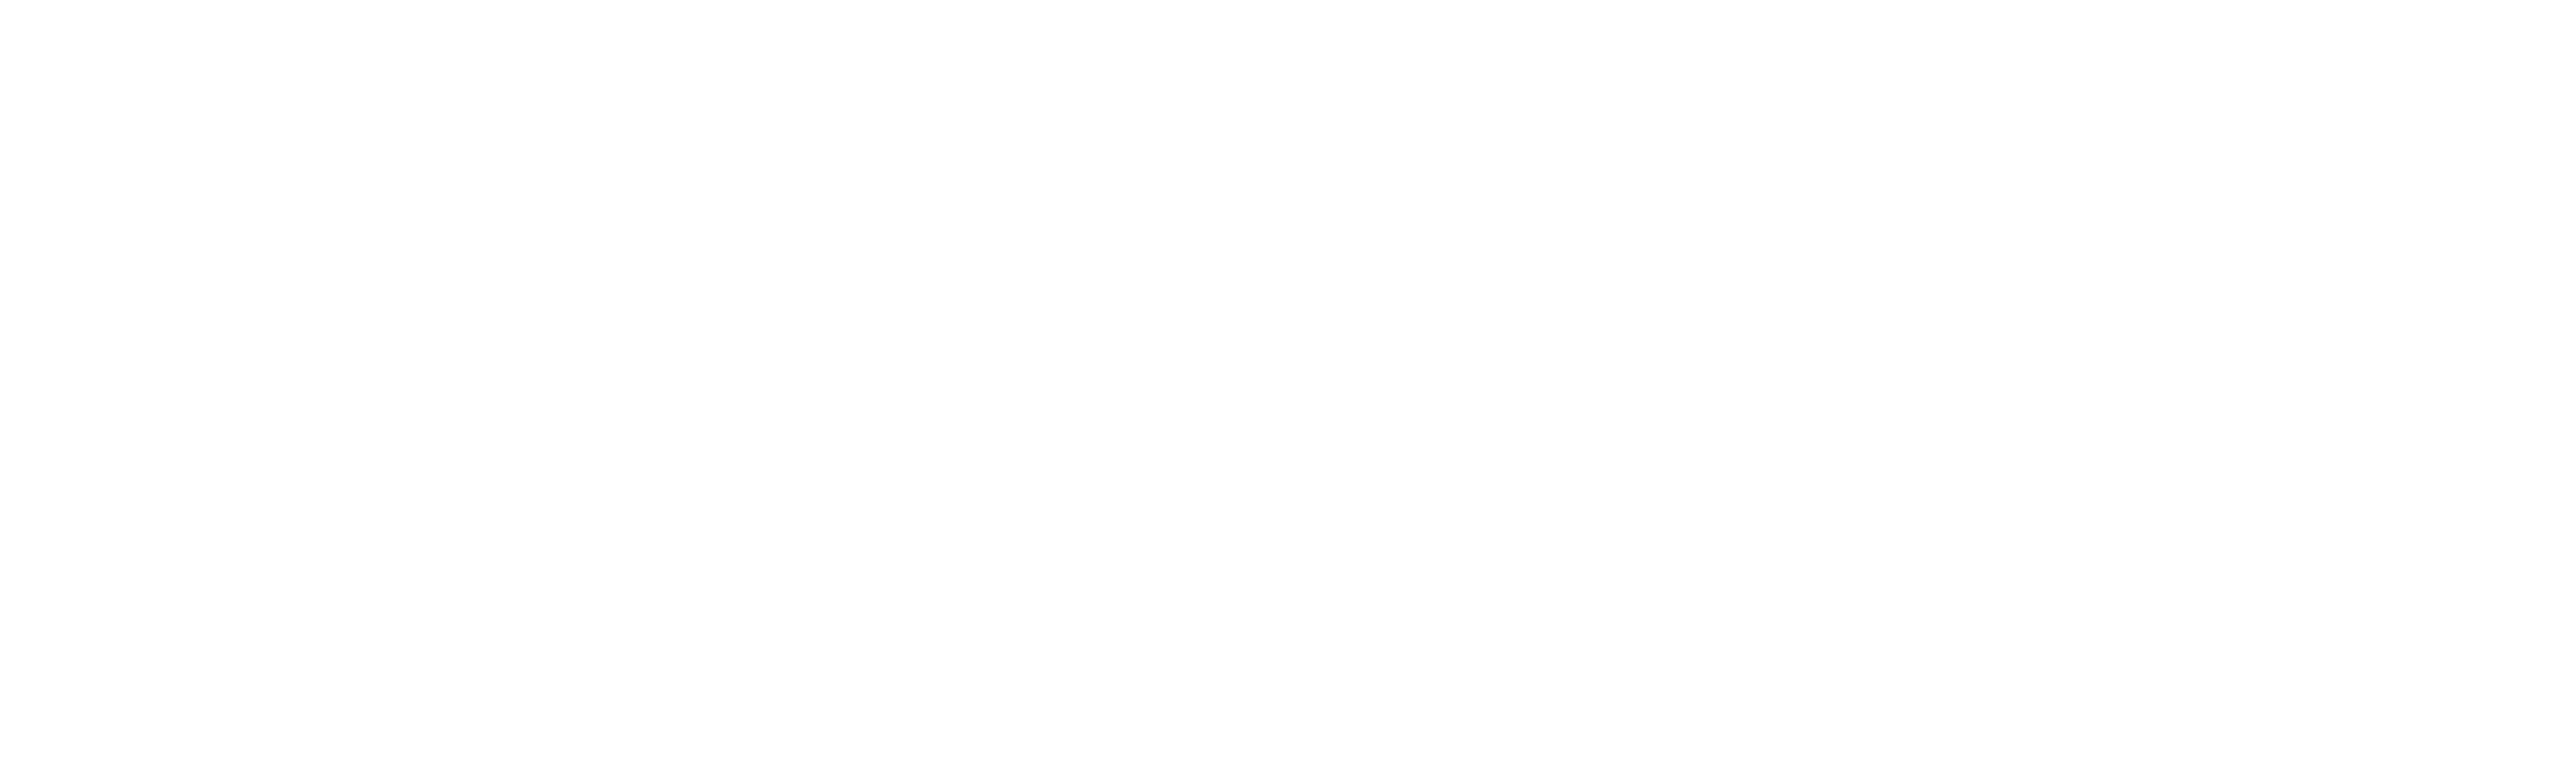 Rohe Mimarlık Logo